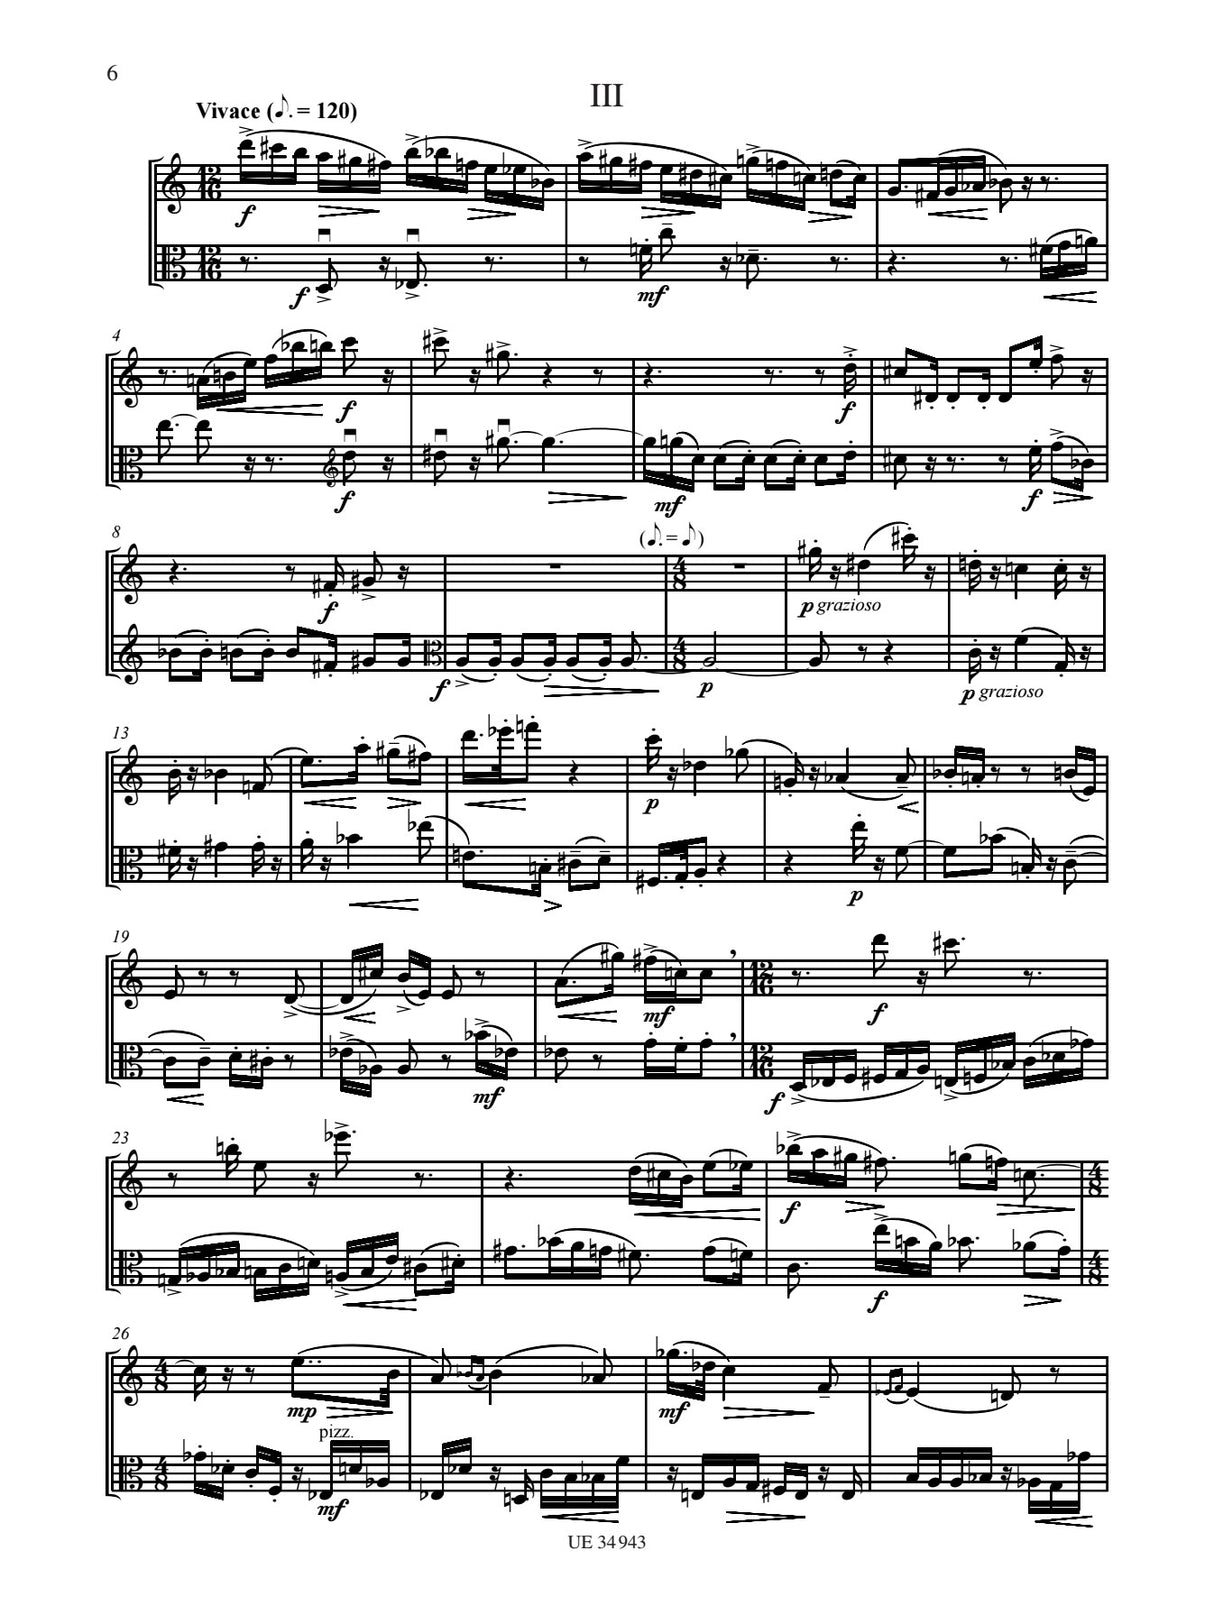 Krenek: Sonatina for Flute and Viola, Op. 92, No. 2a